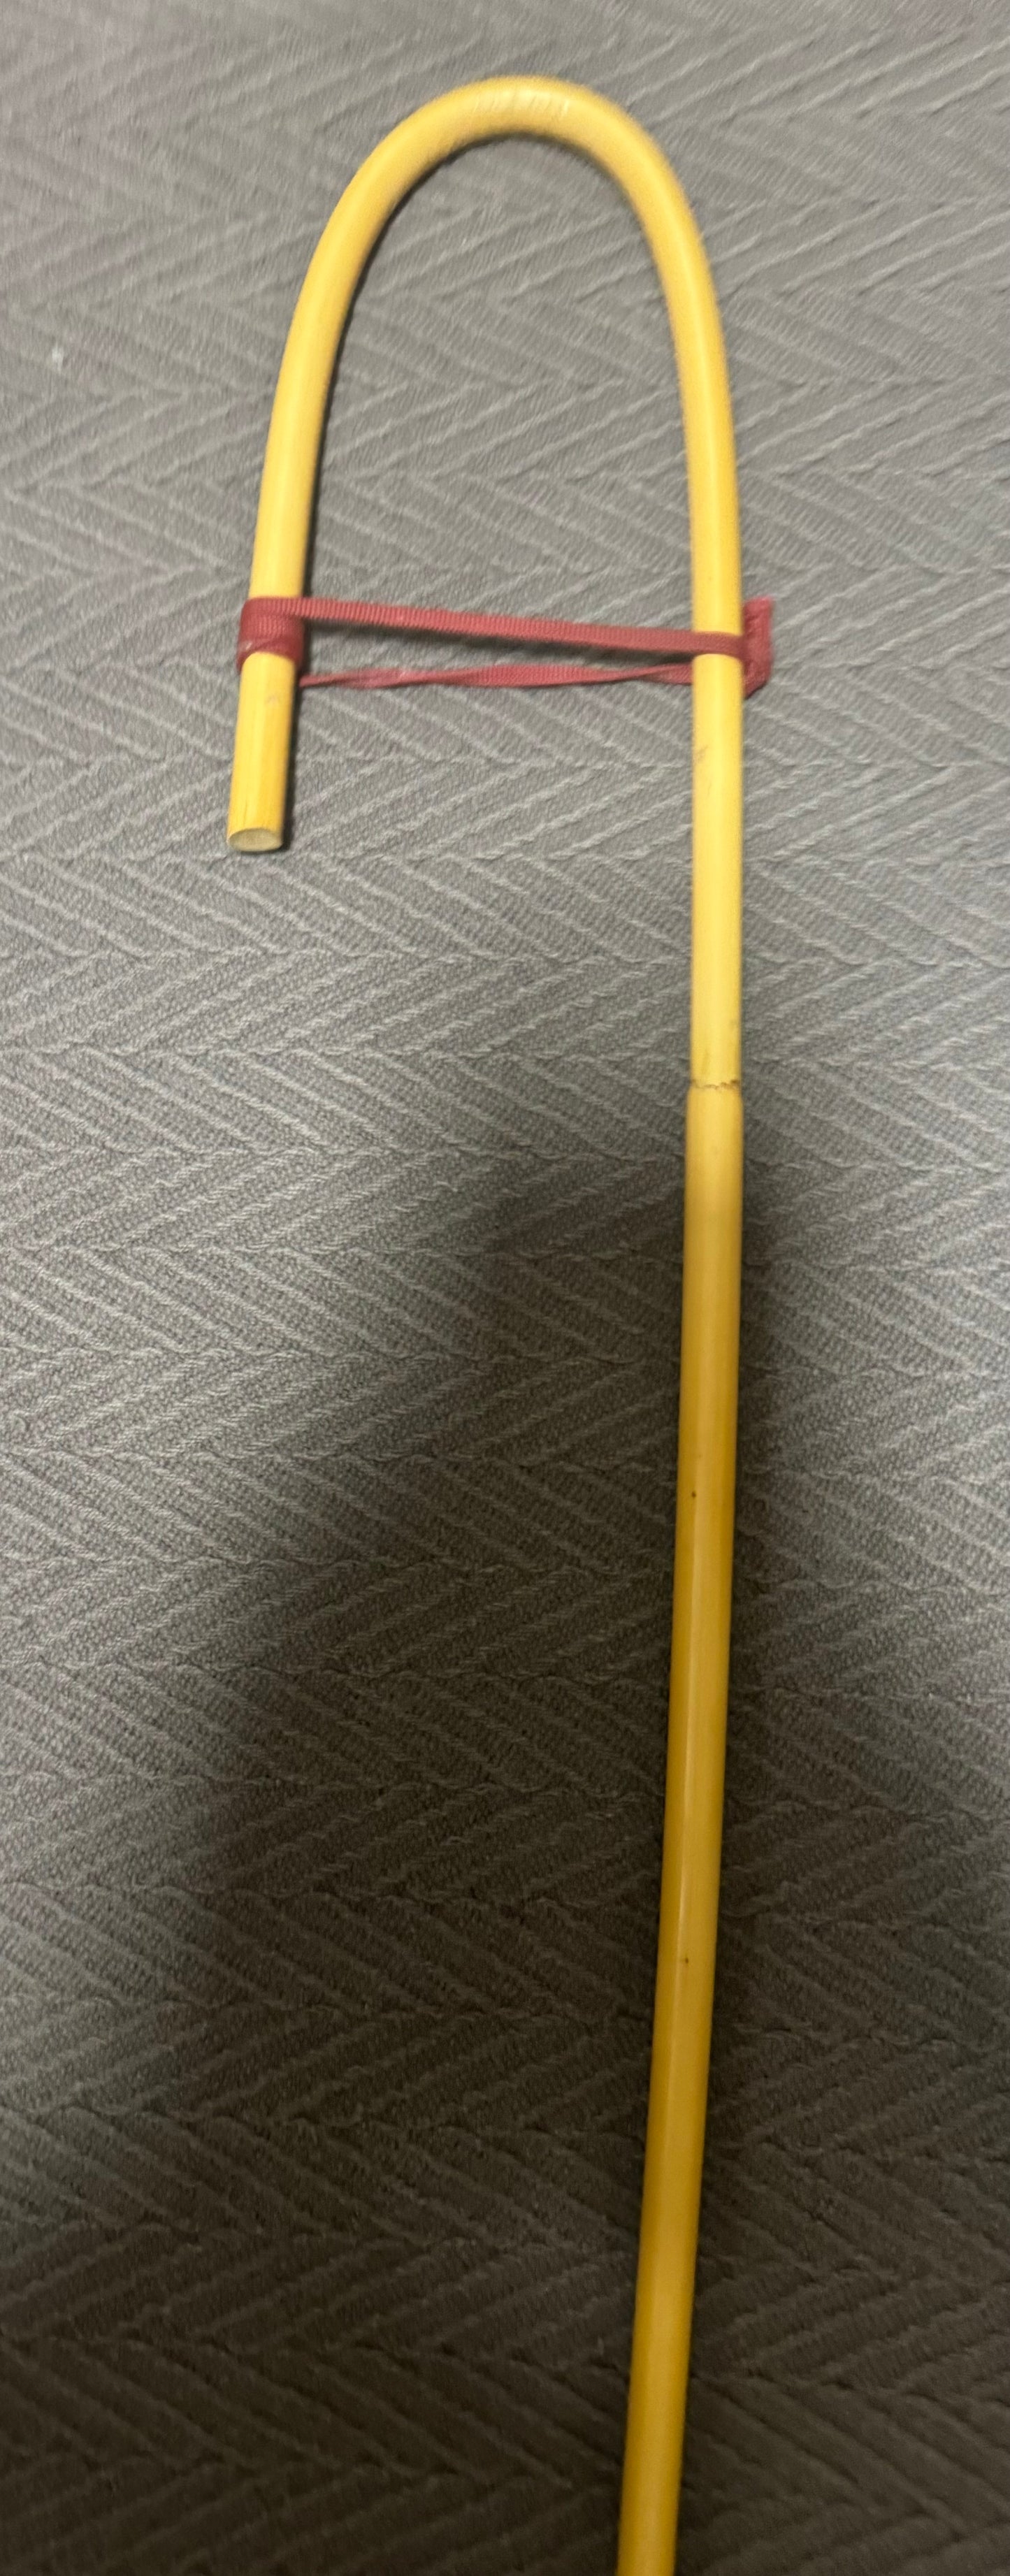 Aristasia Disciplinary Cane  ( Juliana ) - English Crook Handle Dragon Disciplinary cane / Punishment cane - 90 to 93 cms L & 9.5 - 10 mm D - Englishvice Canes